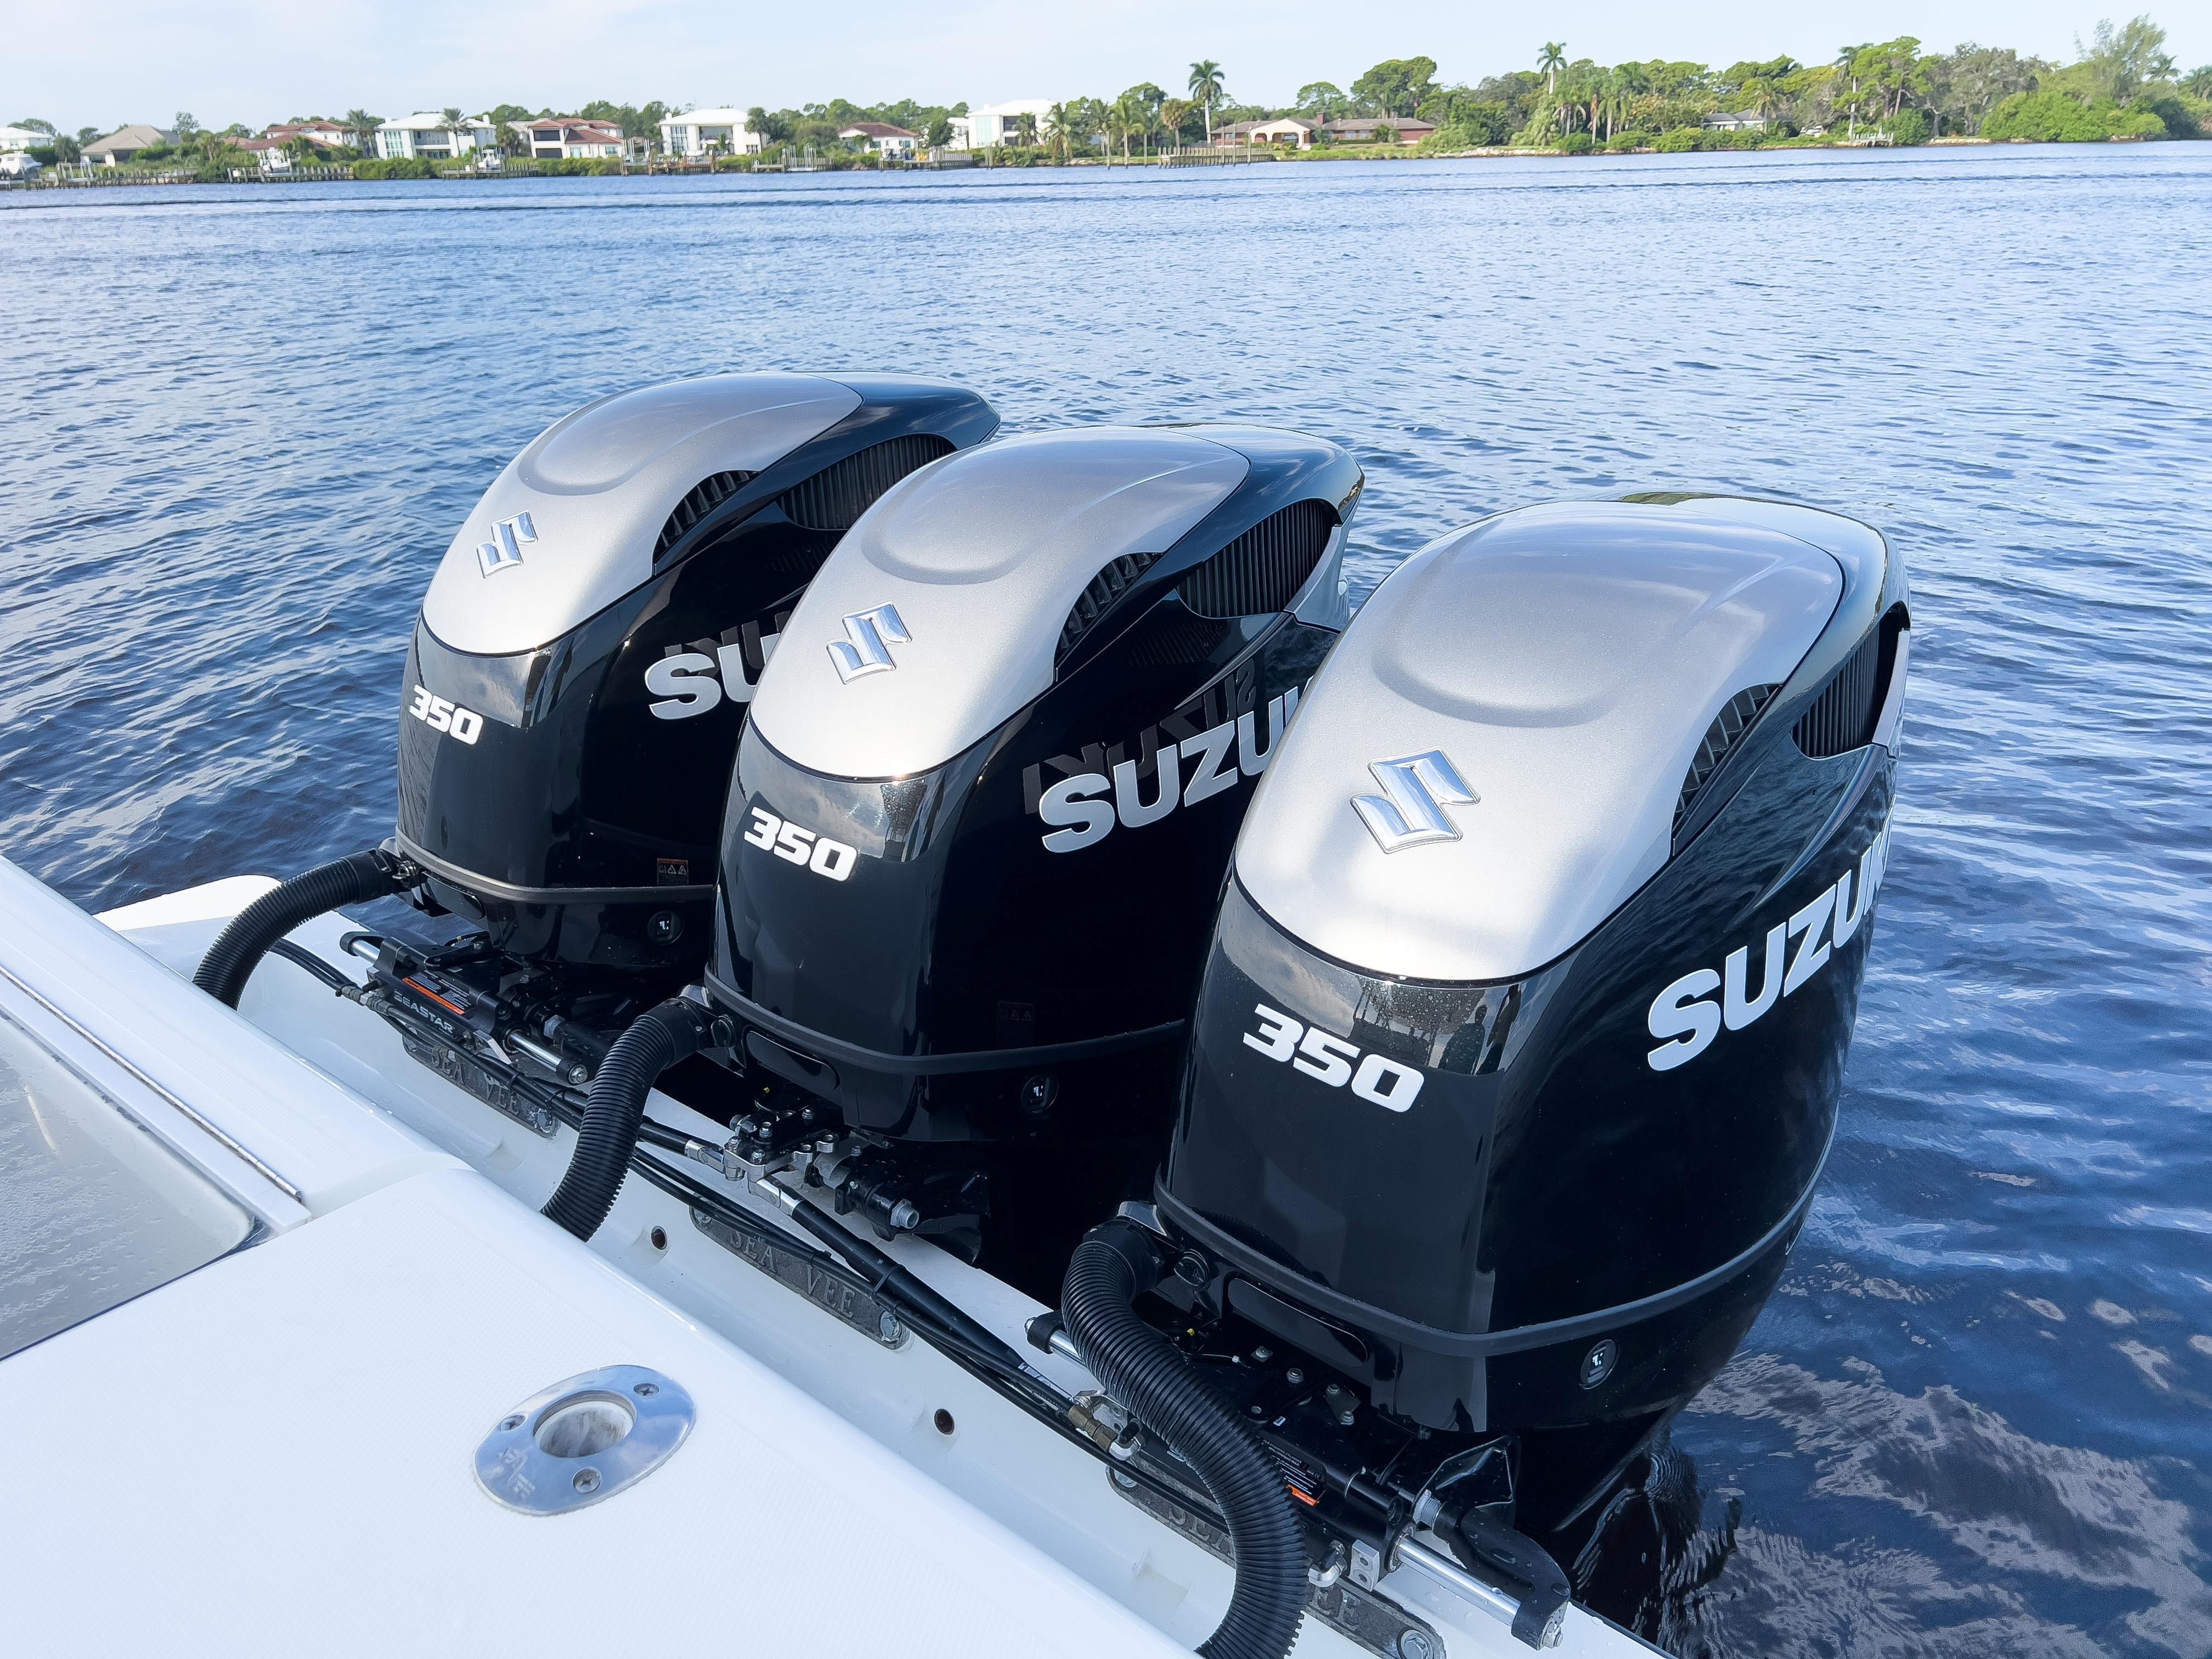 SeaVee 39 Deam Maker - Triple Suzuki Outboard Engines